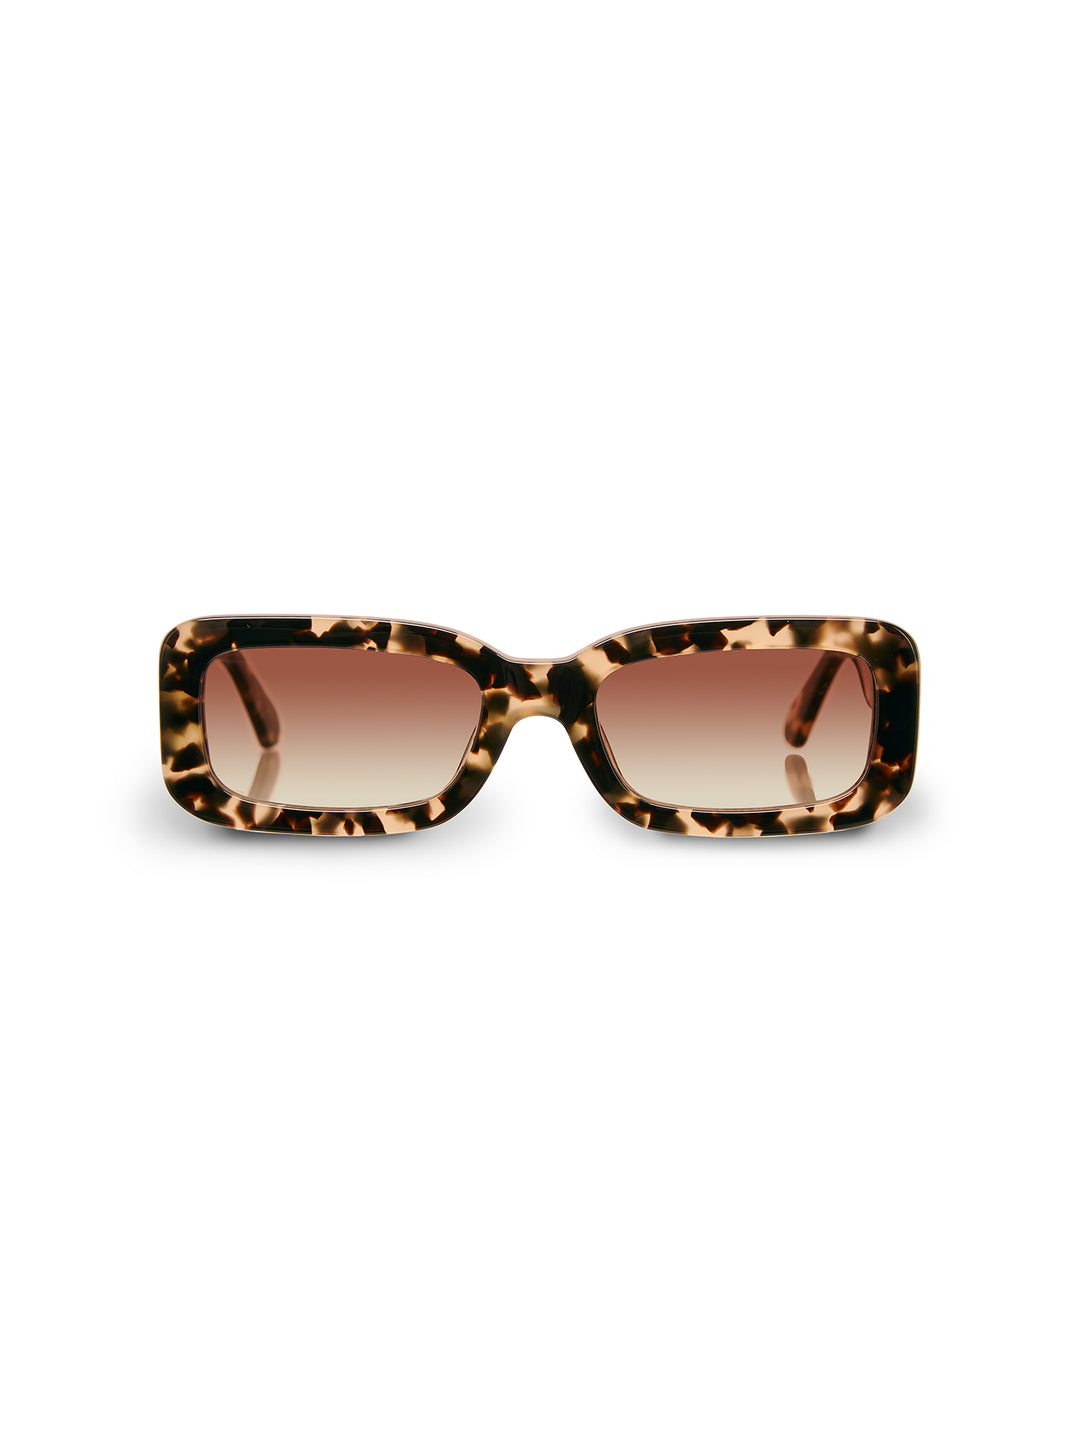 RETRO - Sunglasses • Gold Brown Tortoise